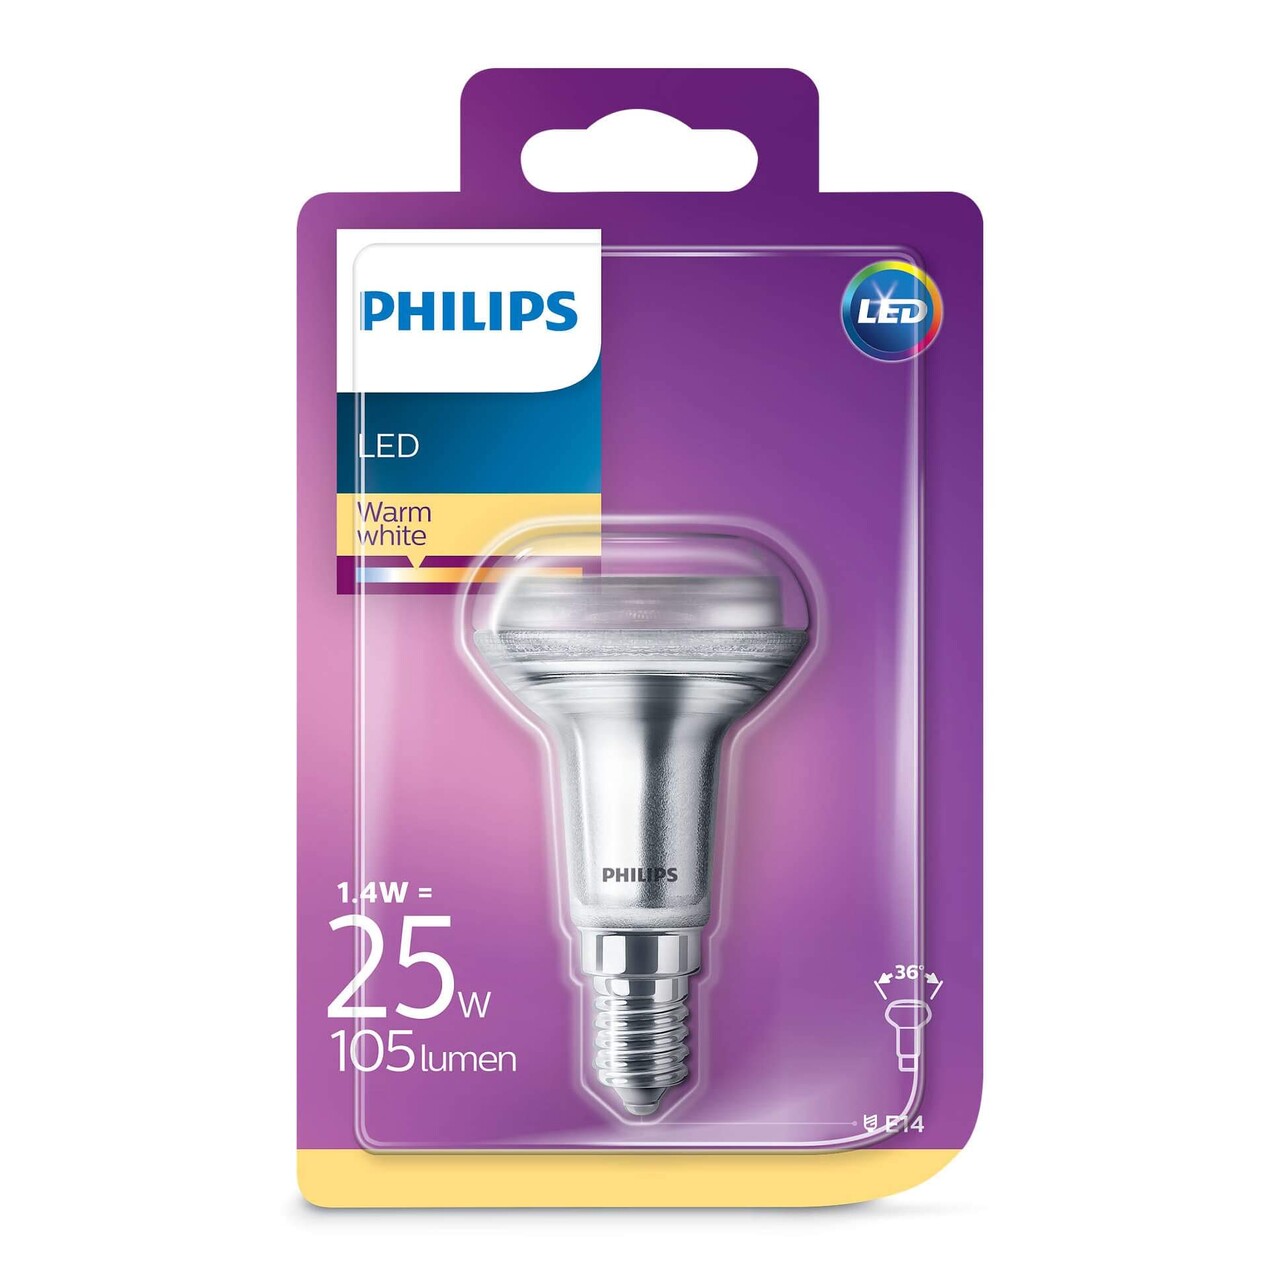 Klooster Afwijken Van Bulb LED 1,4W (105lm) R50 Reflector E14 - Philips - Buy online